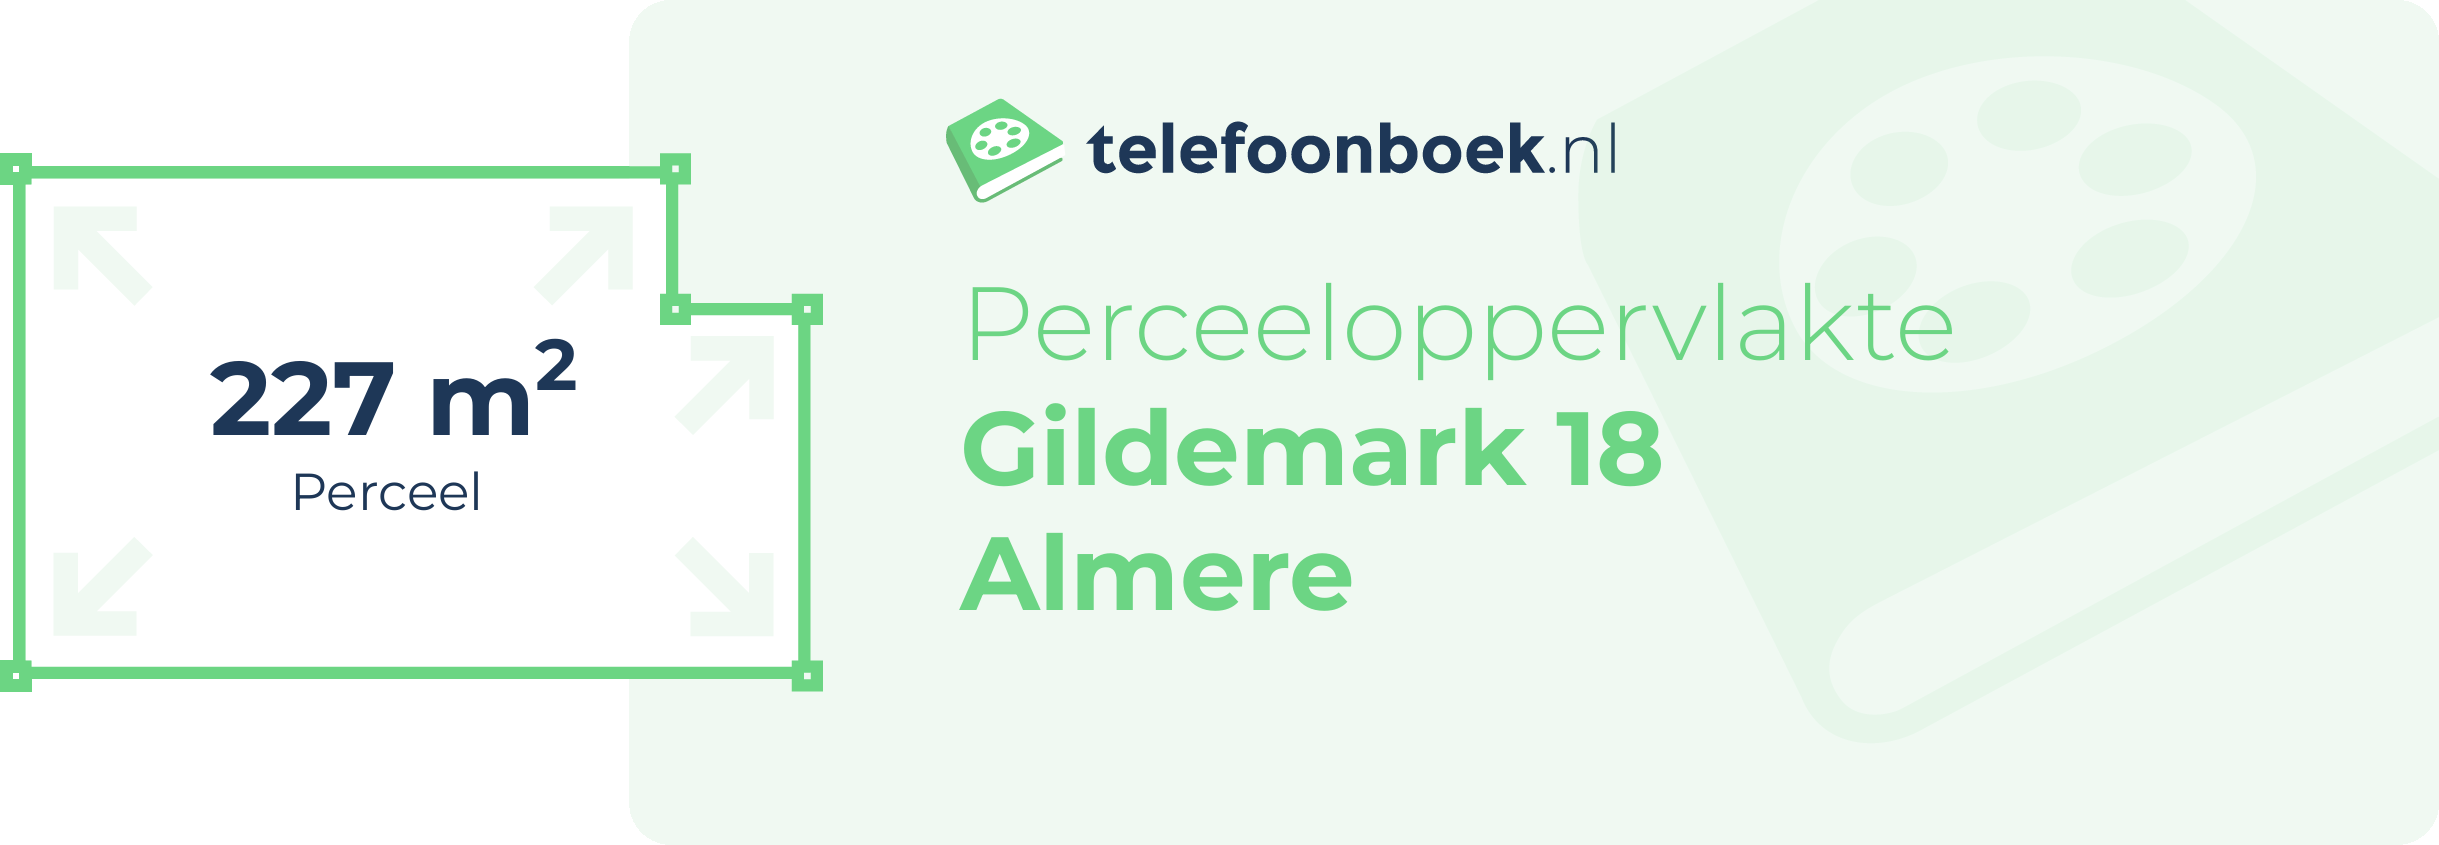 Perceeloppervlakte Gildemark 18 Almere